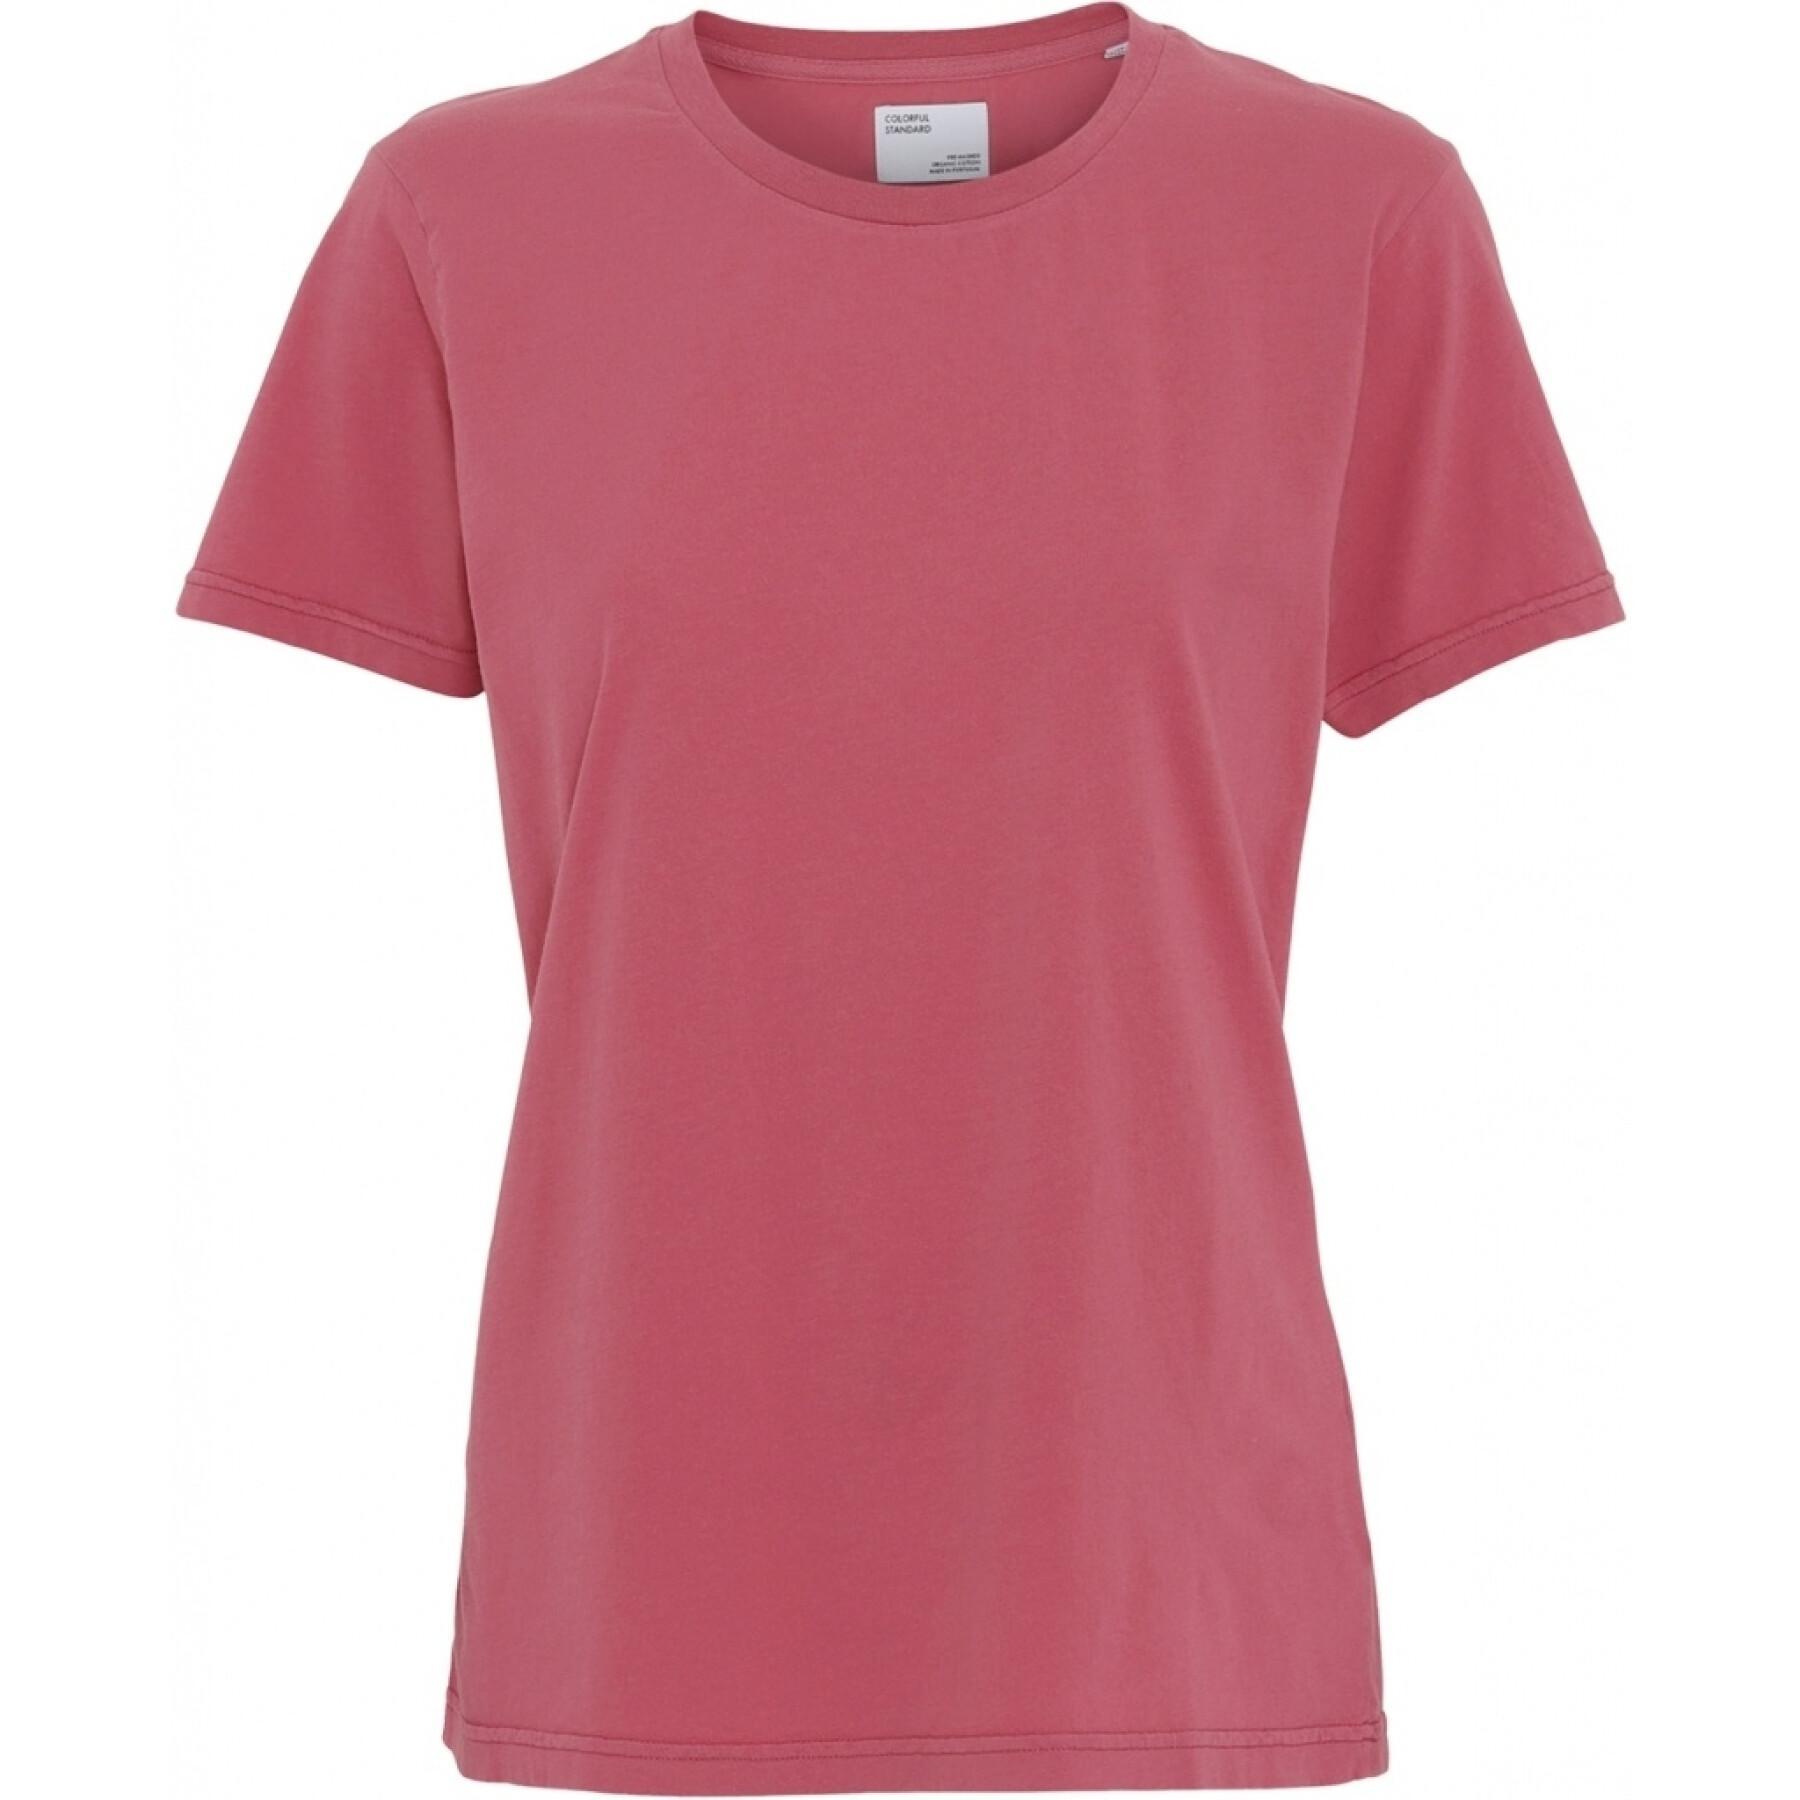 T-shirt femme Colorful Standard Light Organic raspberry pink